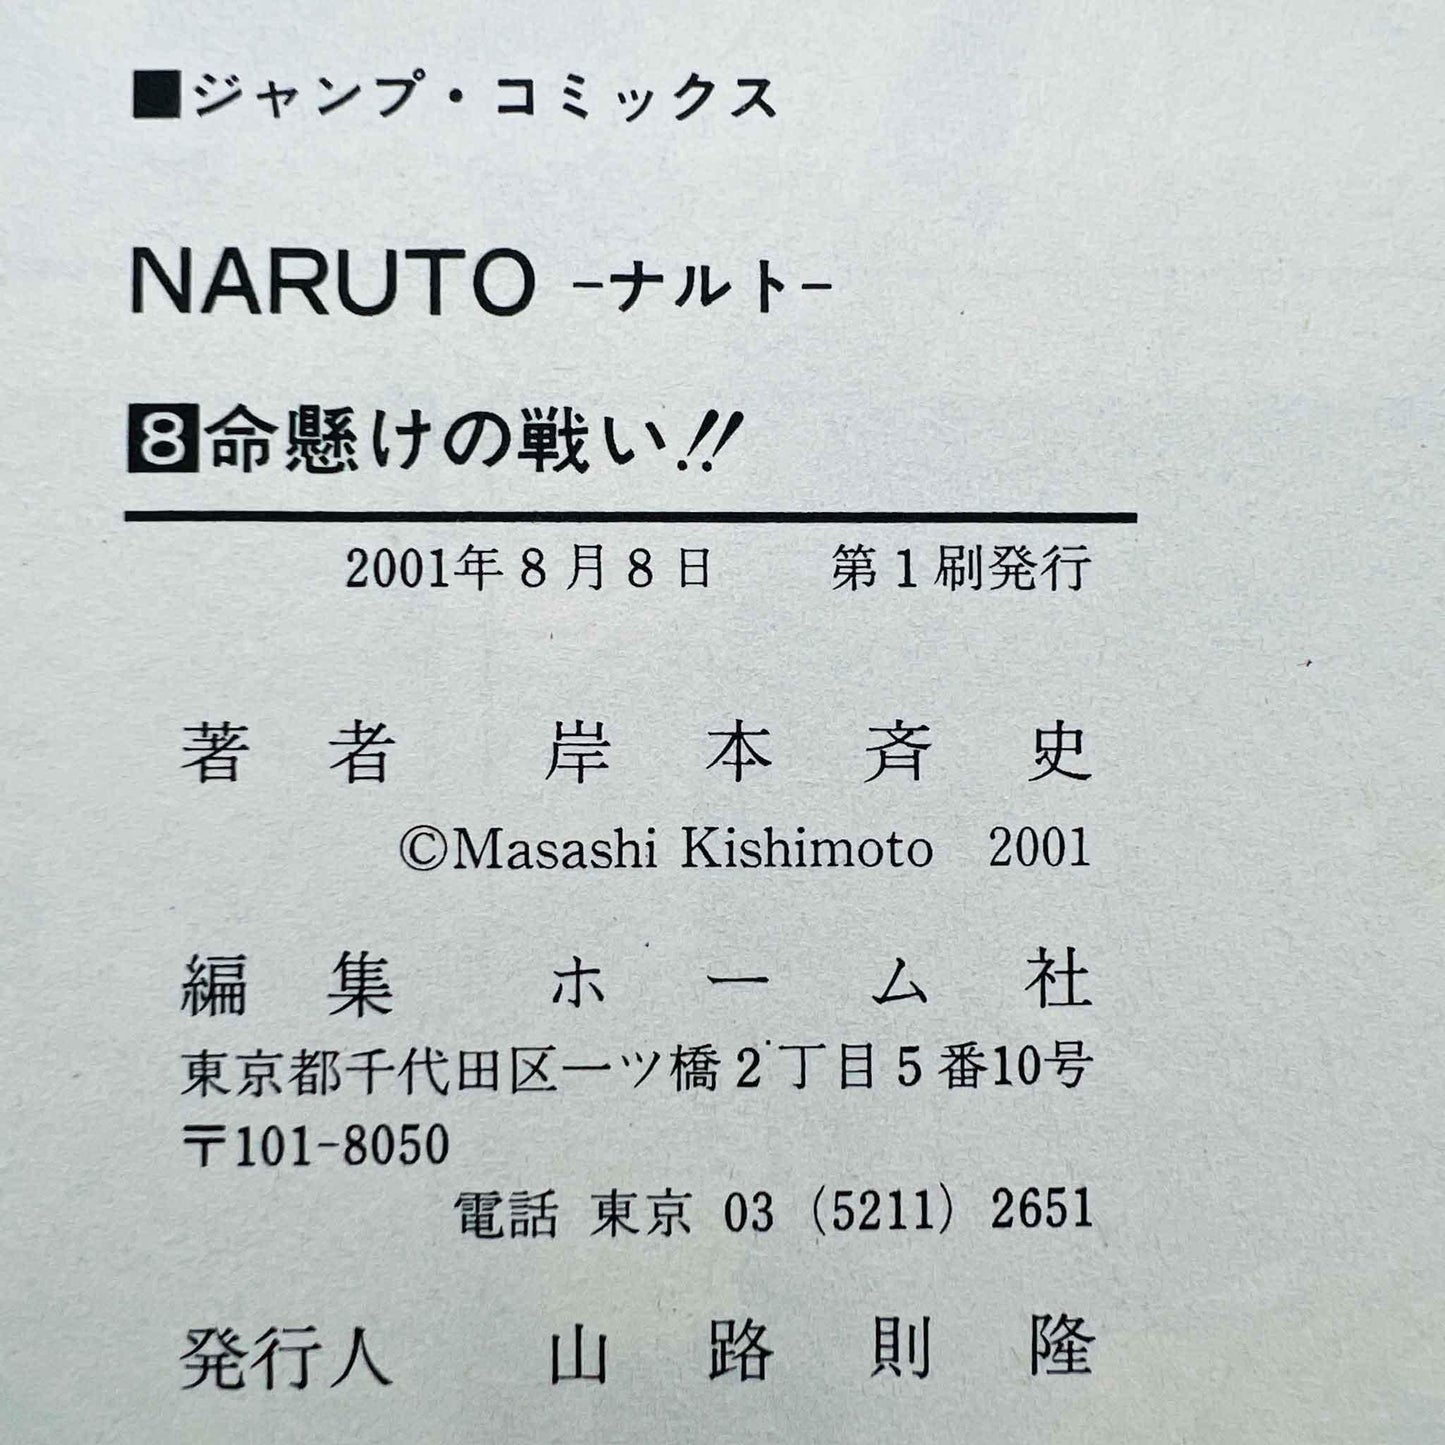 Naruto - Volume 08 - 1stPrint.net - 1st First Print Edition Manga Store - M-NARUTO-08-001